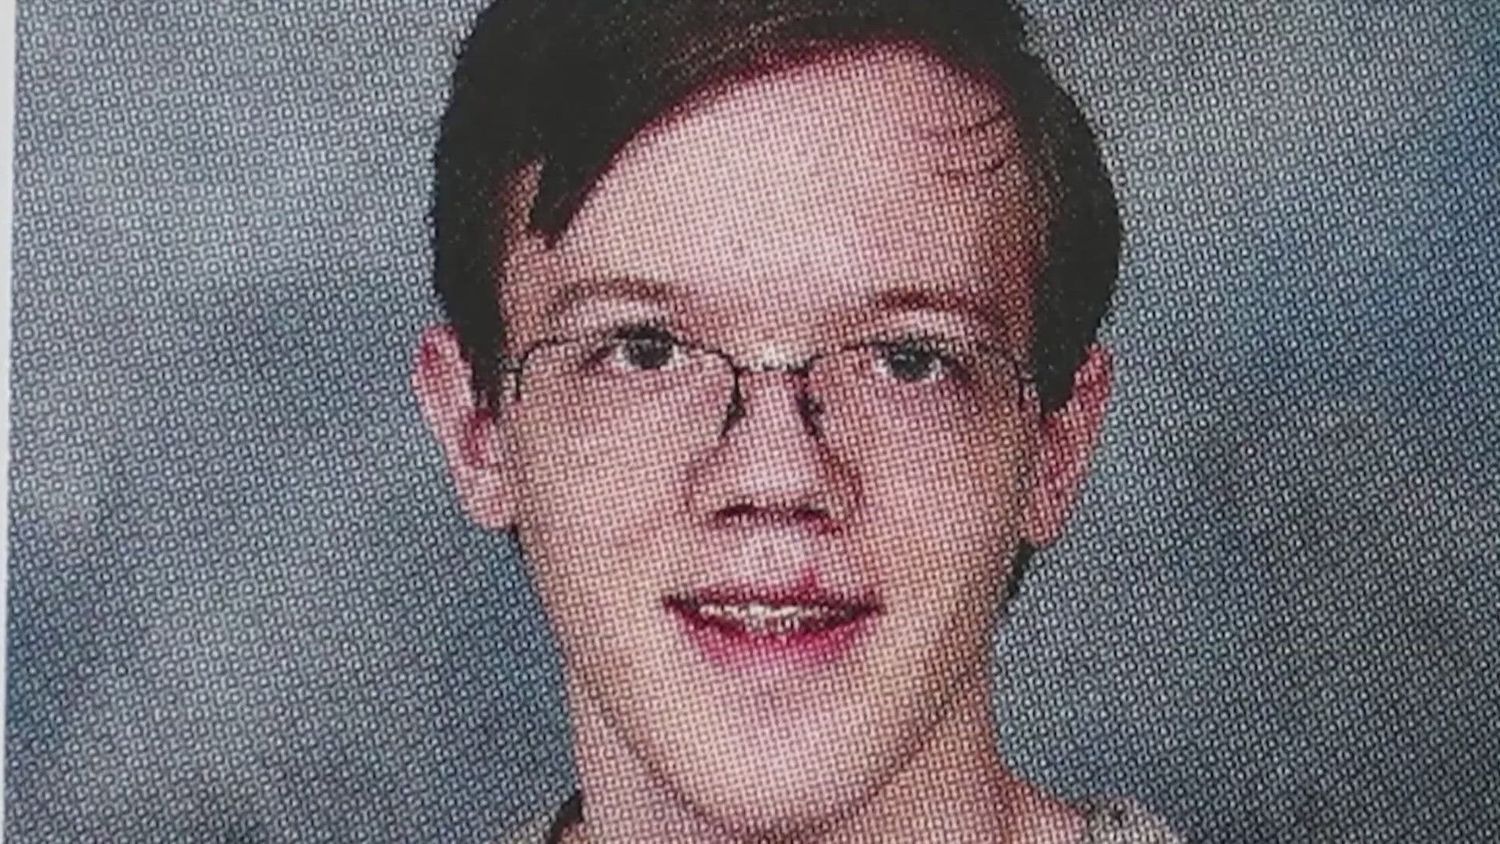 Trump Rally Shooter Identified as 20-Year-Old Pennsylvania Man